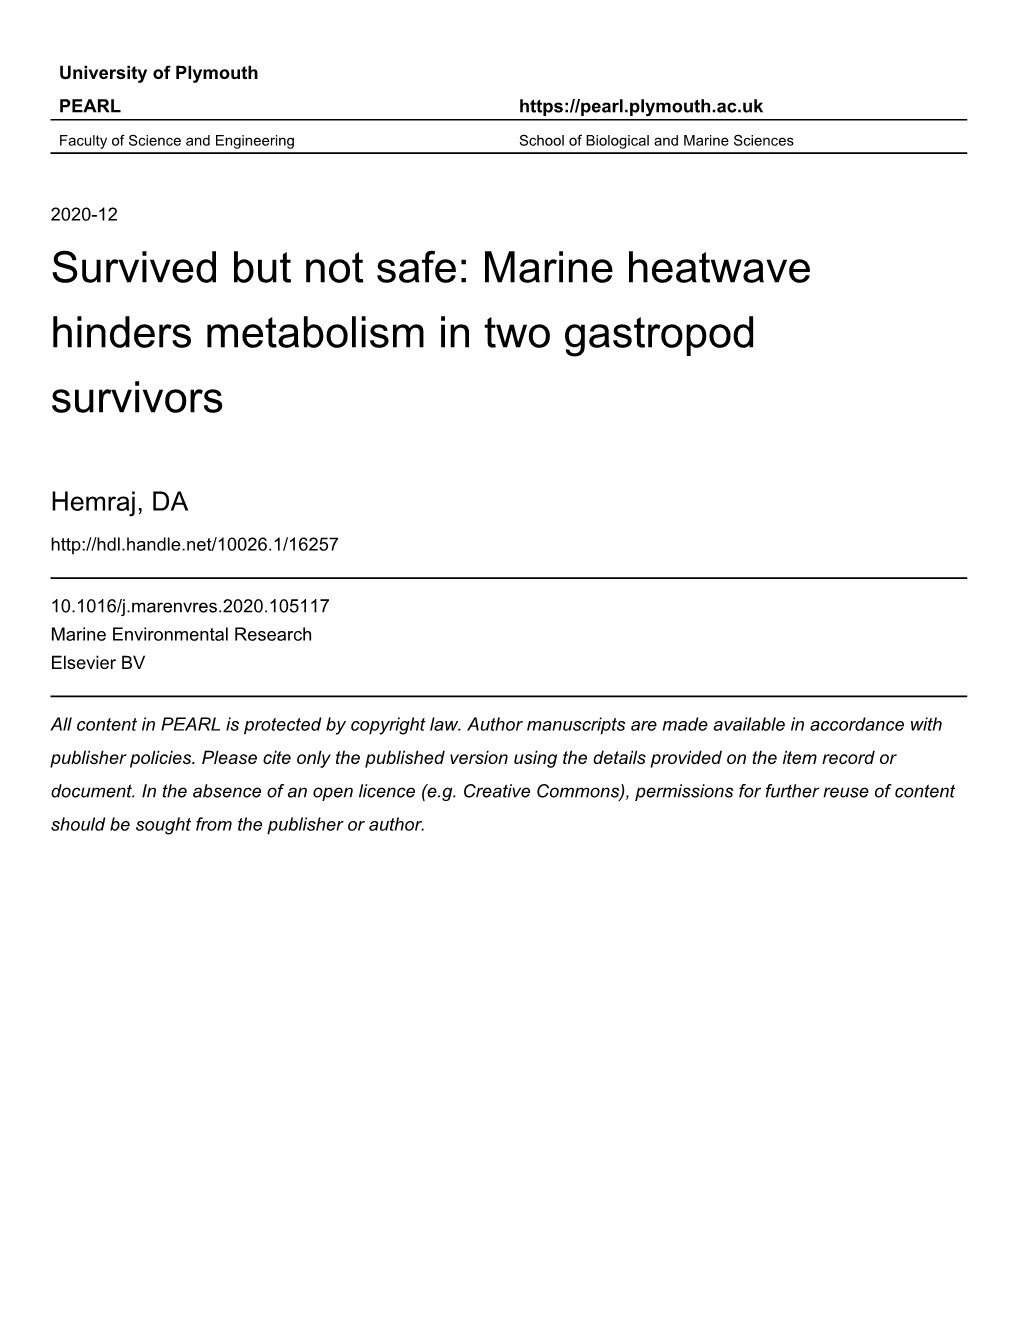 Marine Heatwave Hinders Metabolism in Two Gastropod Survivors